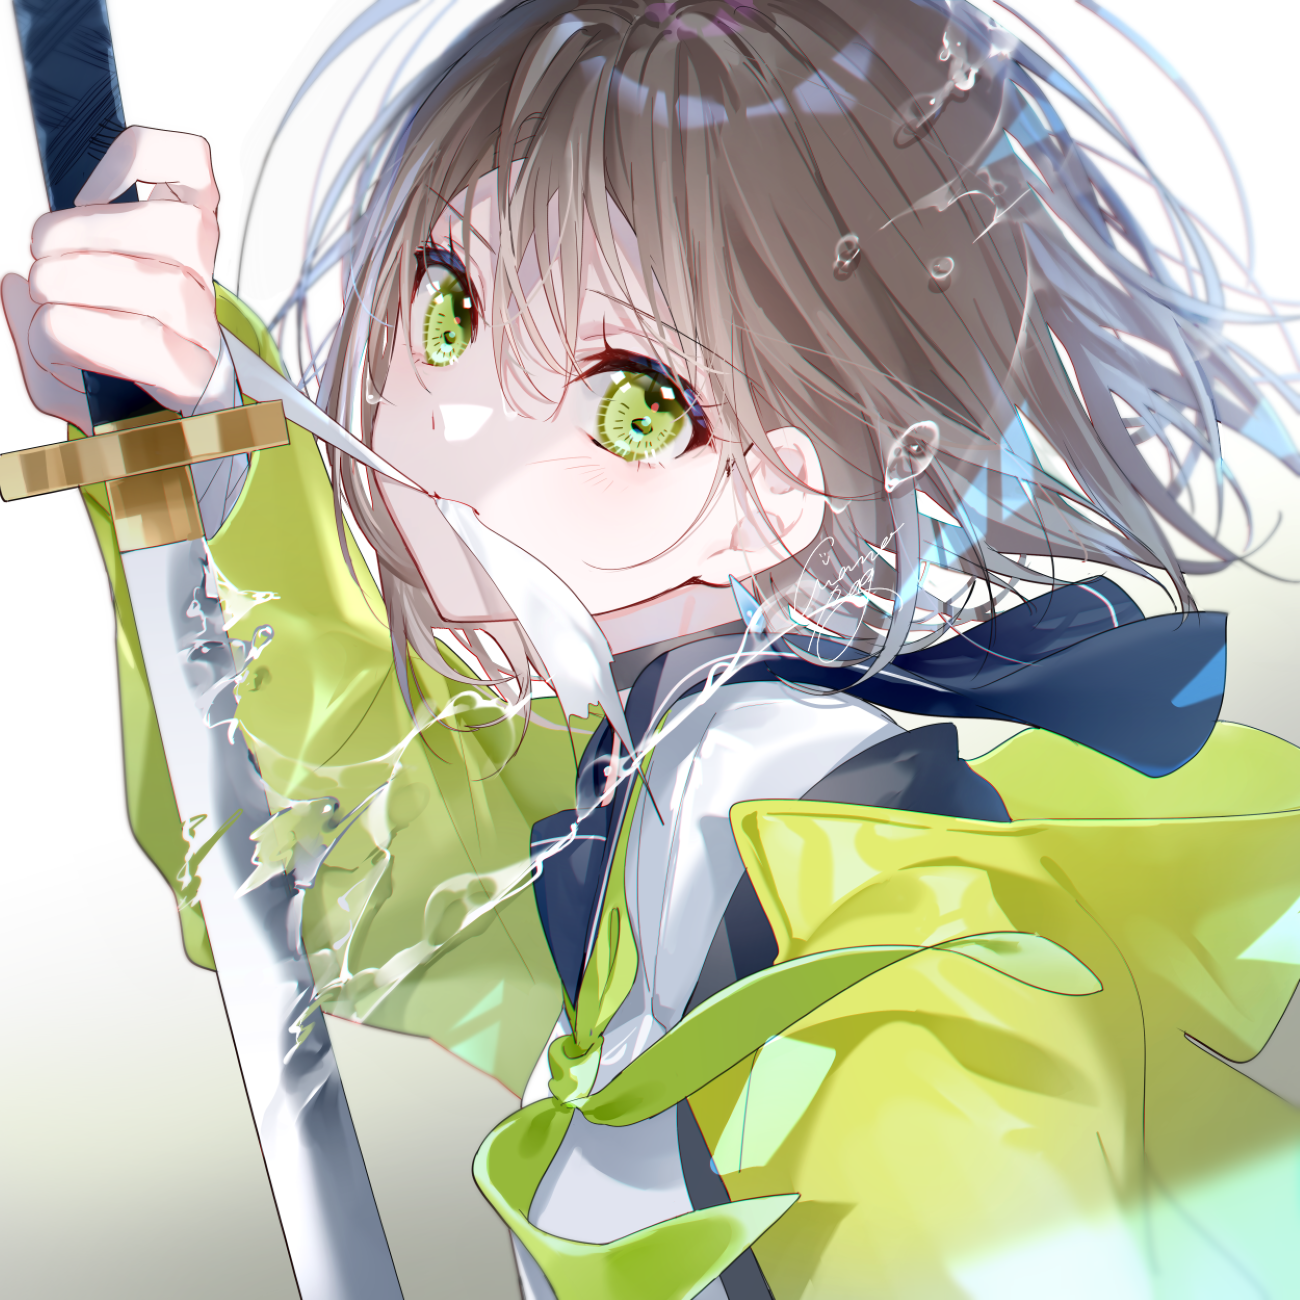 Anime Girls Fantasy Girl Anime Sword In Water Women With Swords 1300x1300